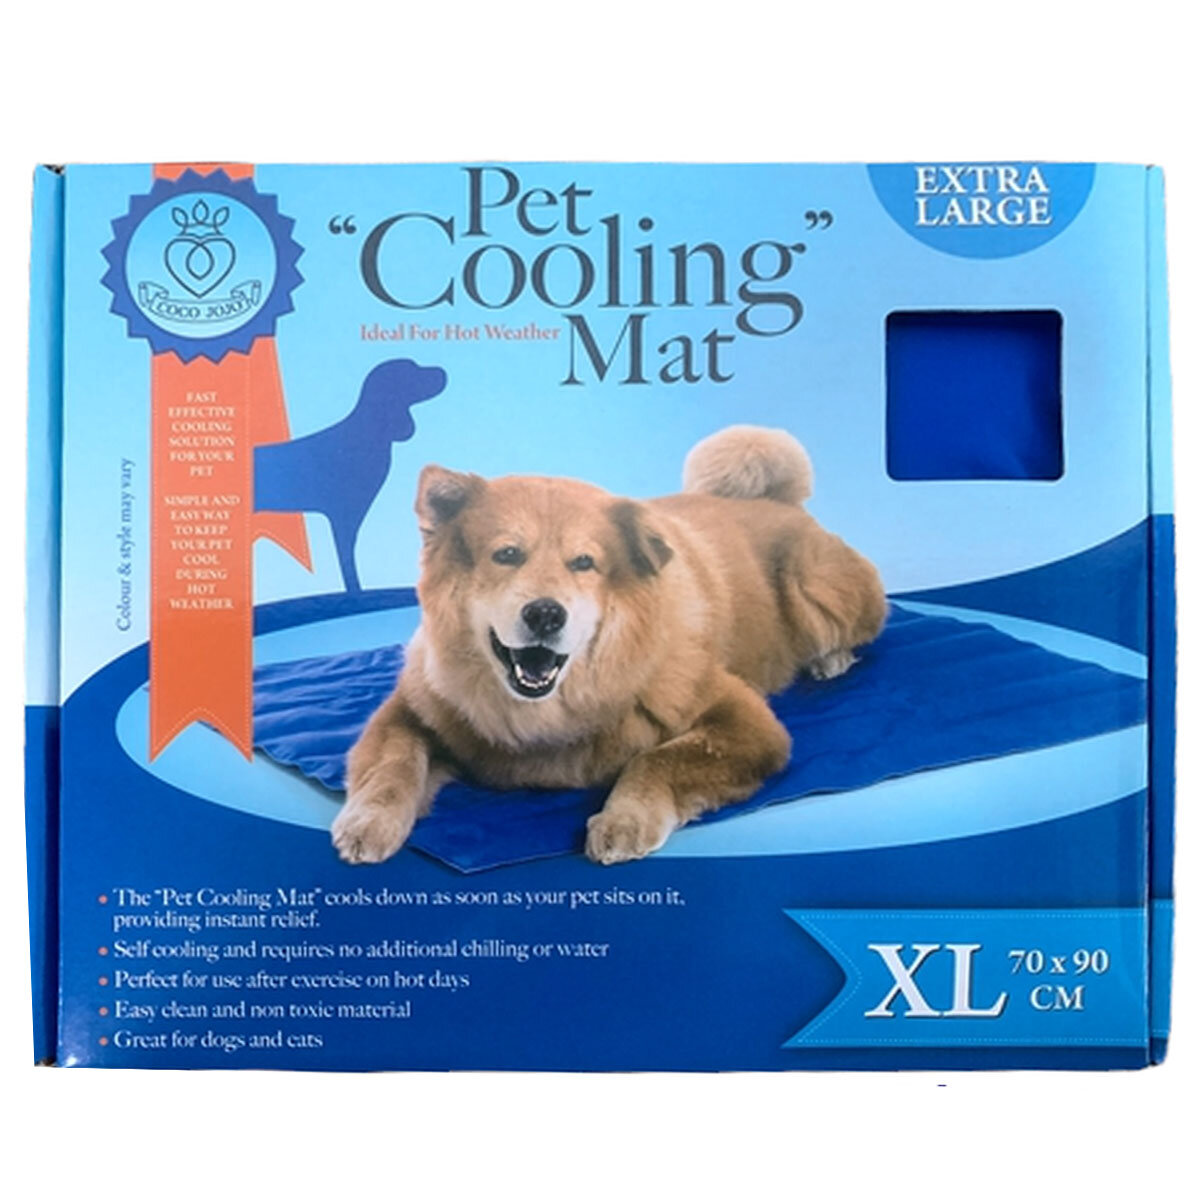 Dog on dog cooling mat